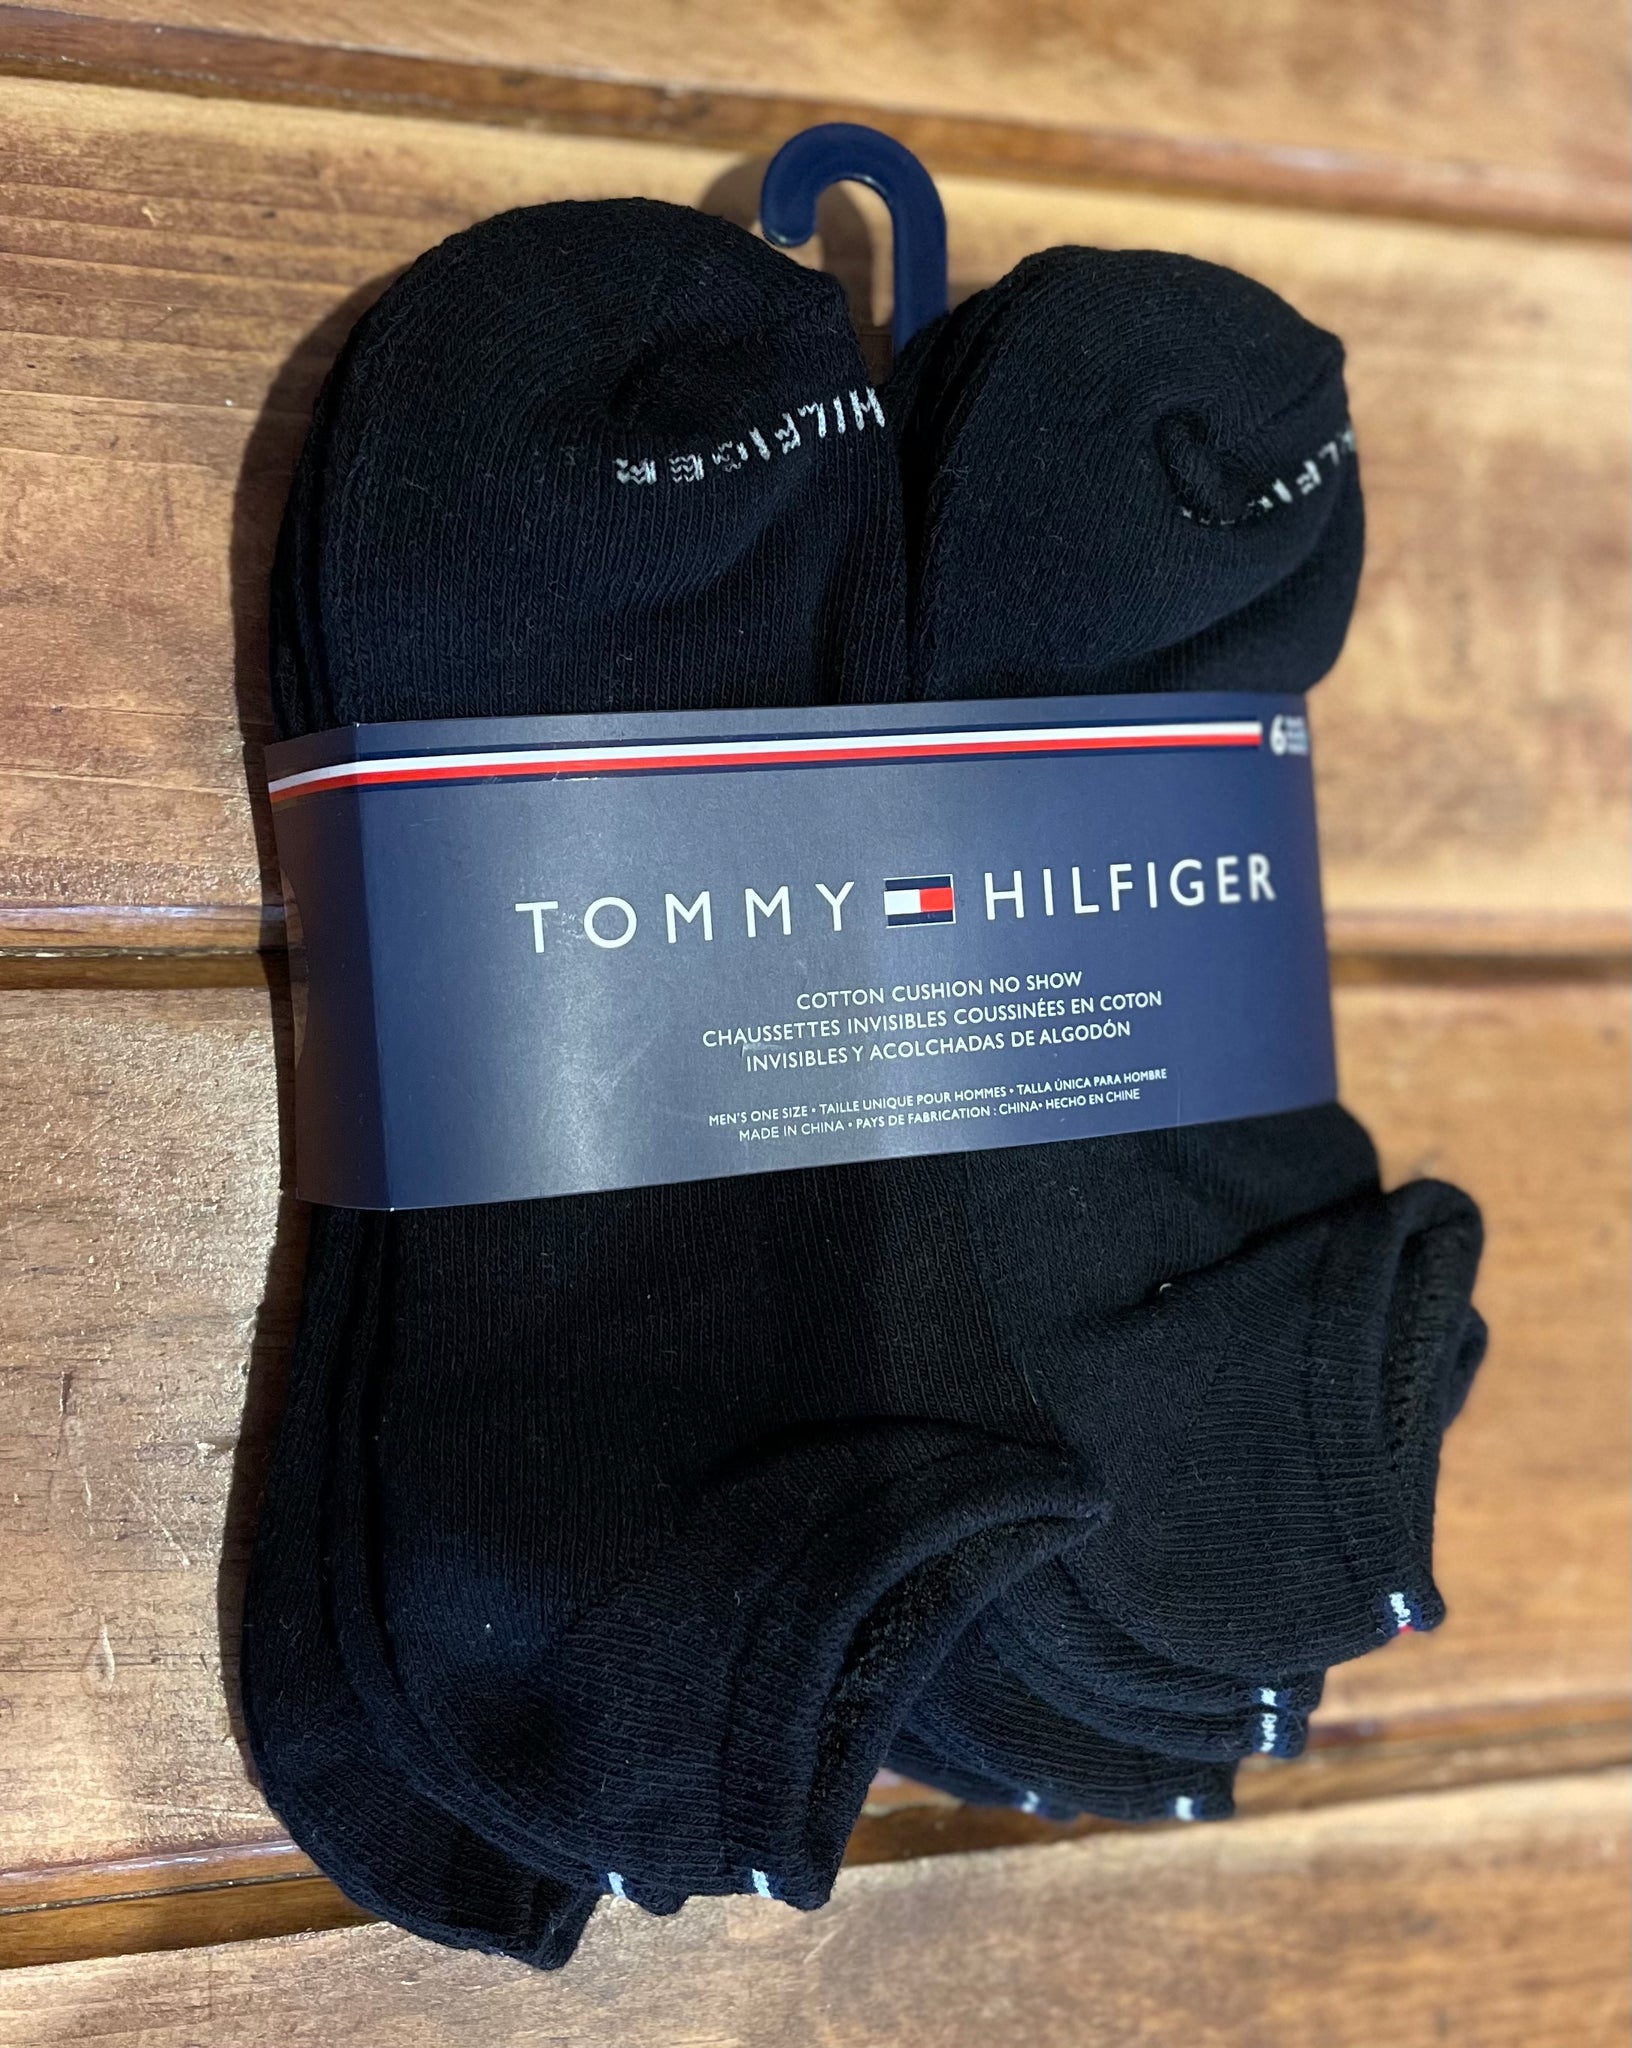 Tommy Hilfiger Men's Athletic Socks – Cushion Crew Socks (6 Pack